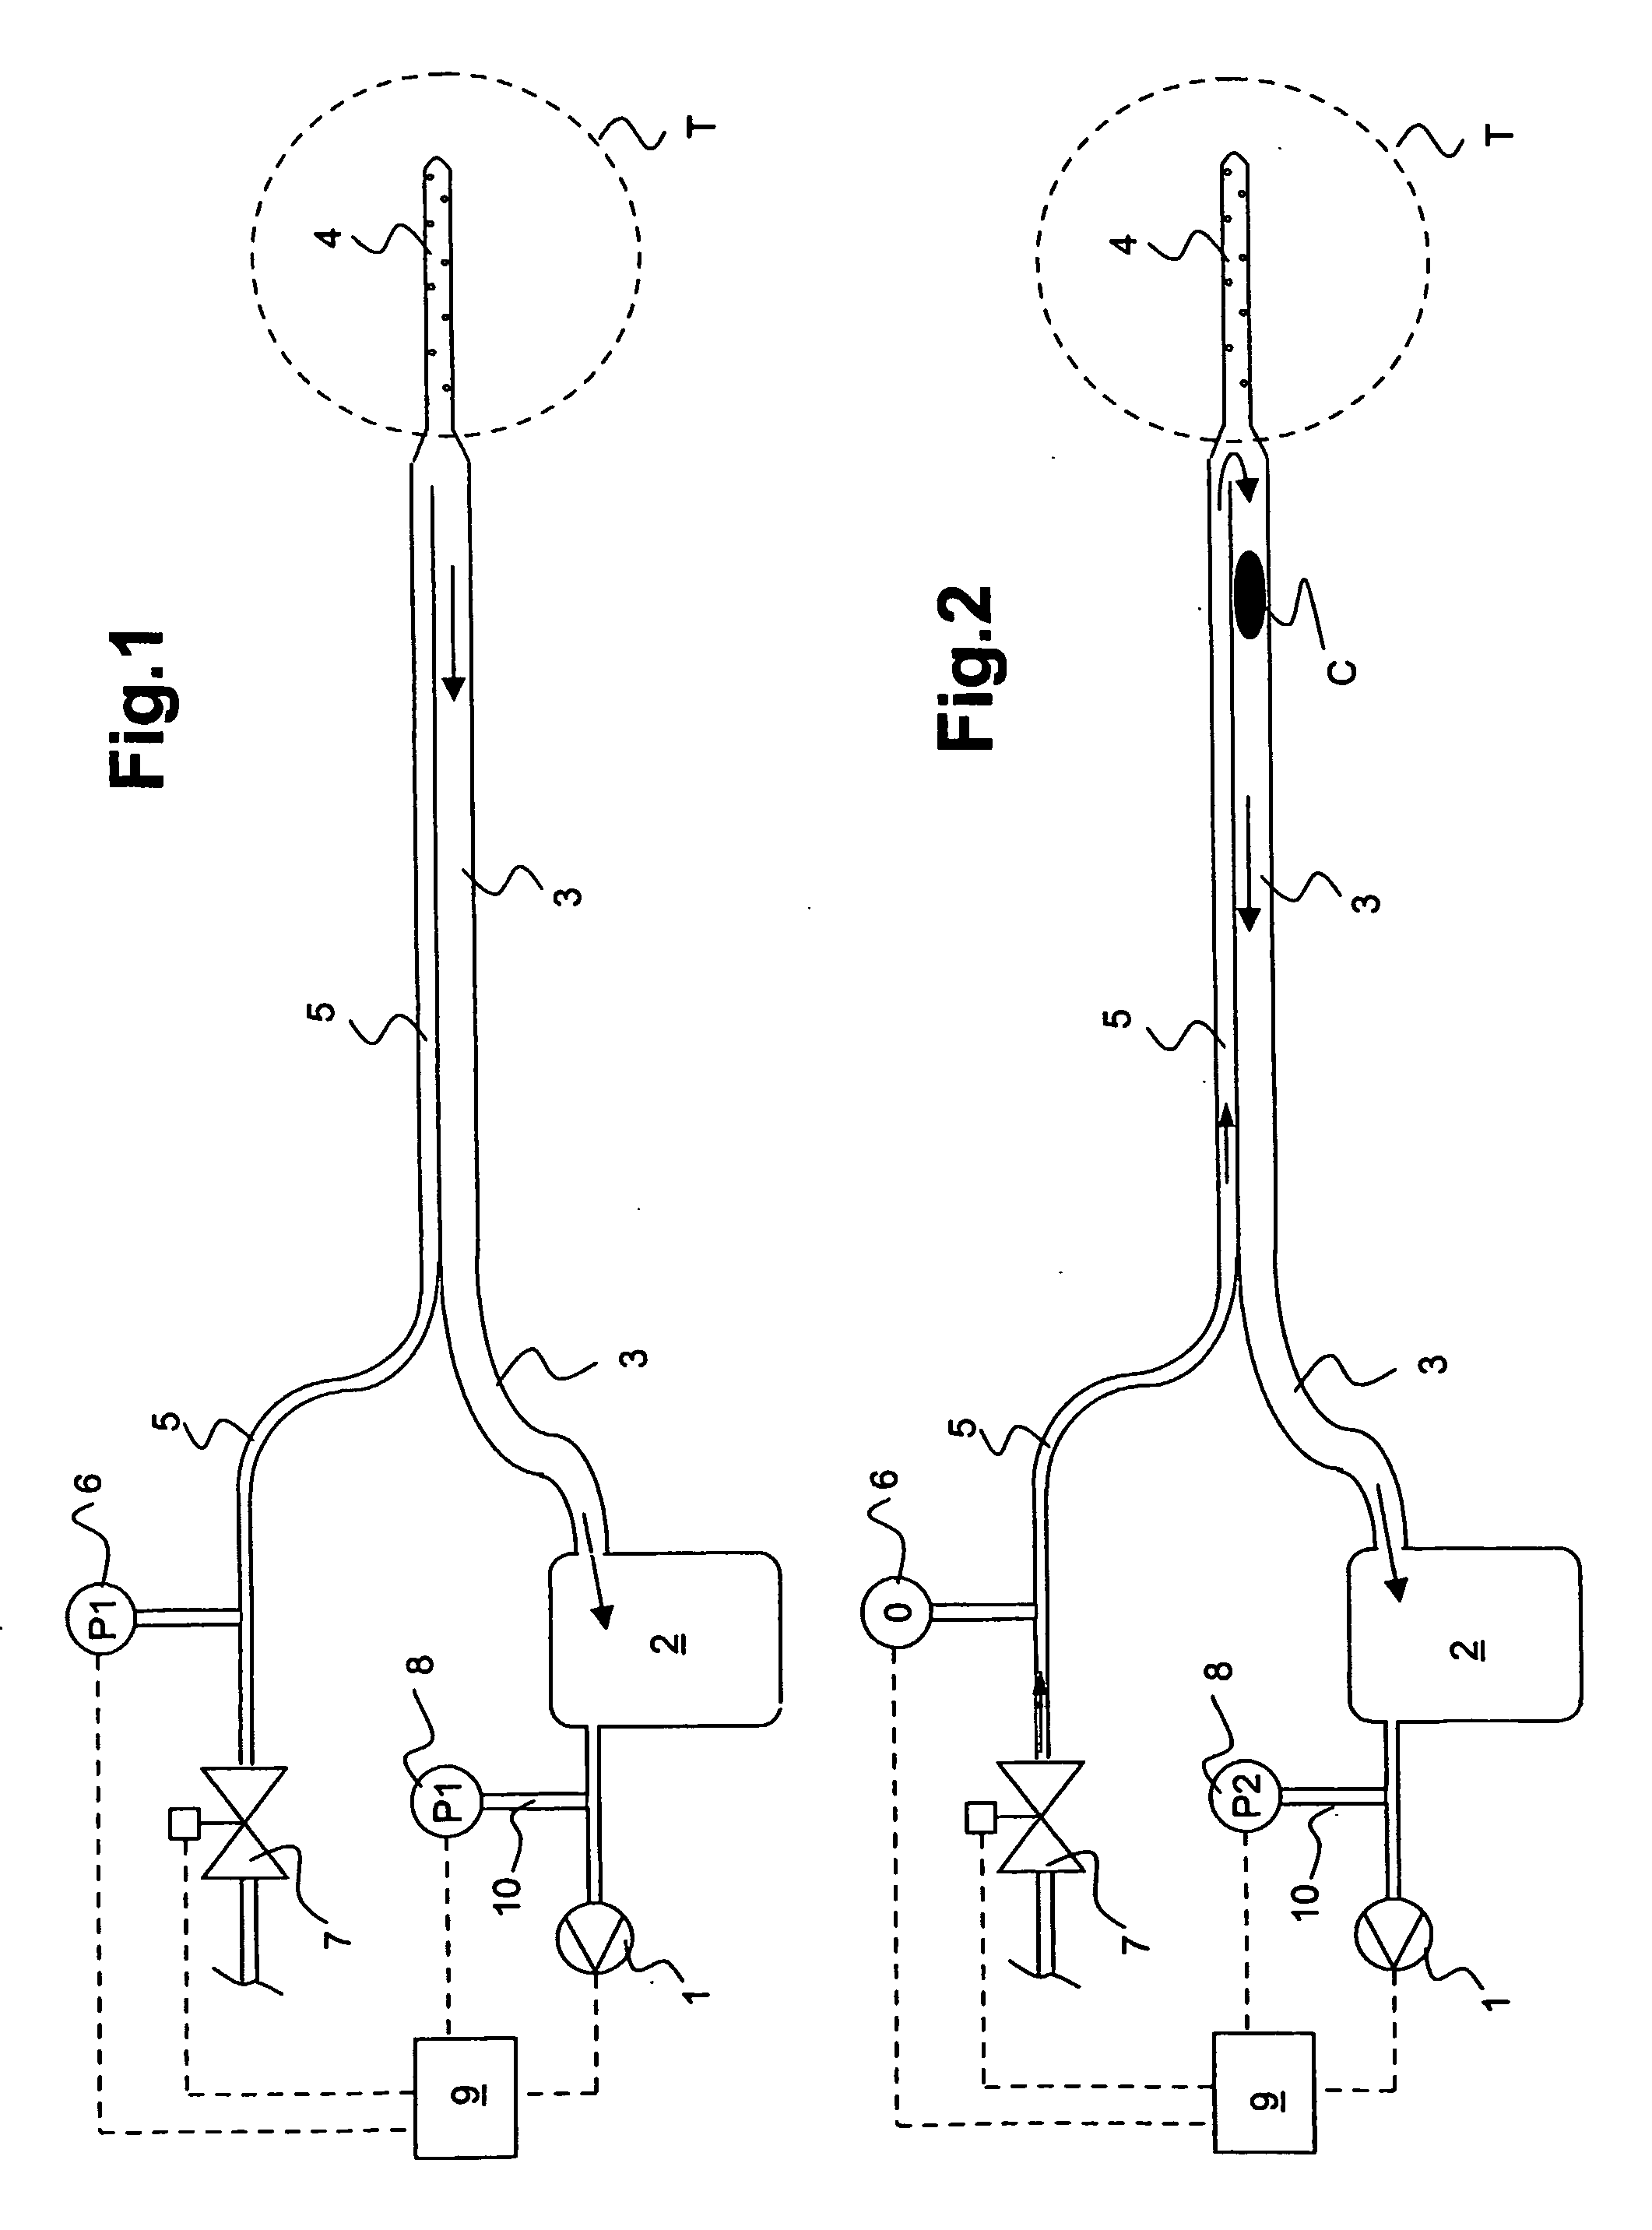 Drainage apparatus and method